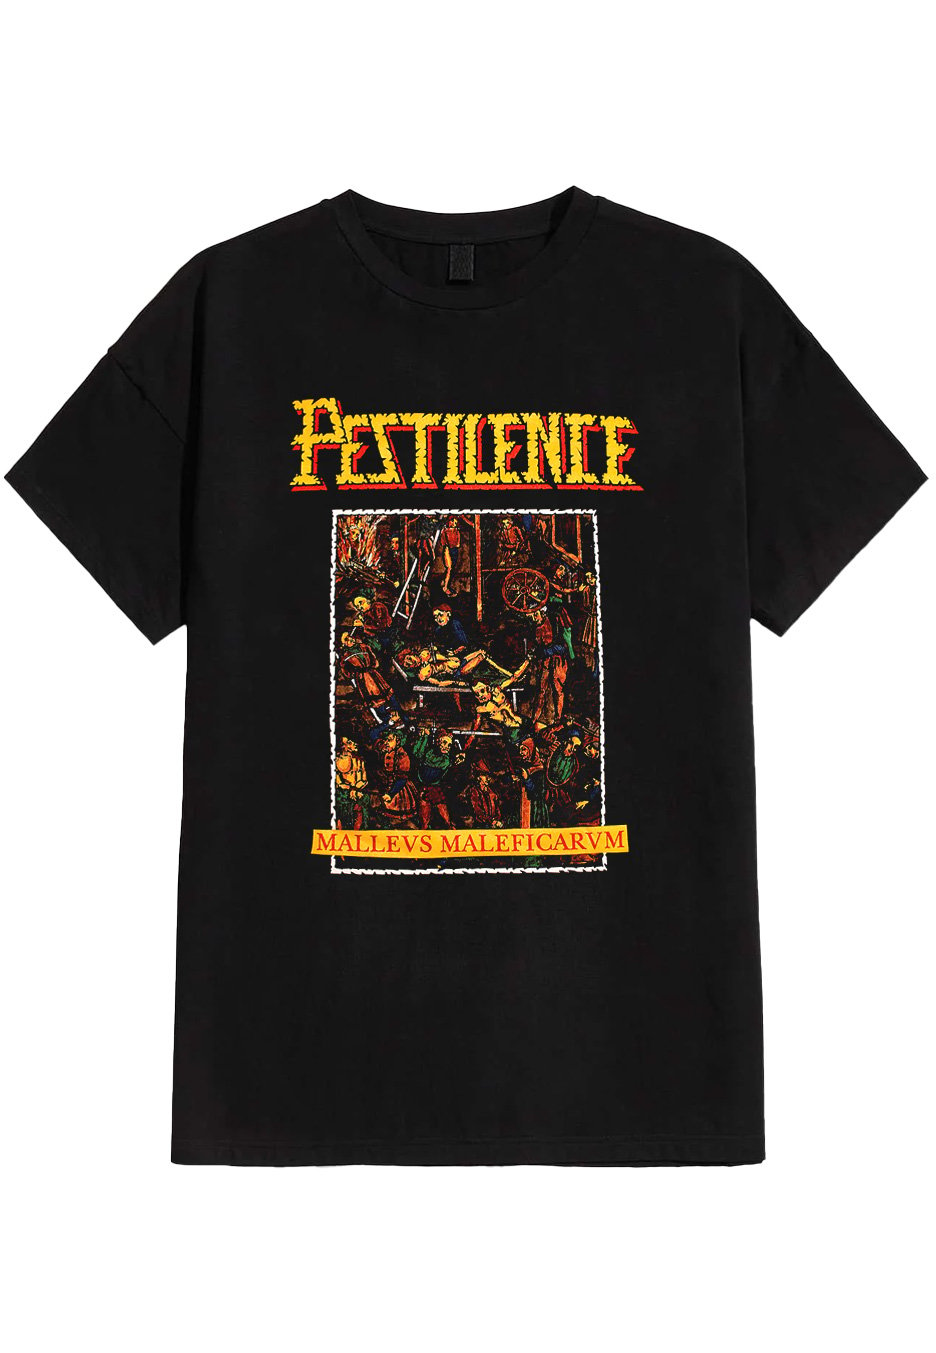 Pestilence - Malleus Malleficarum - T-Shirt